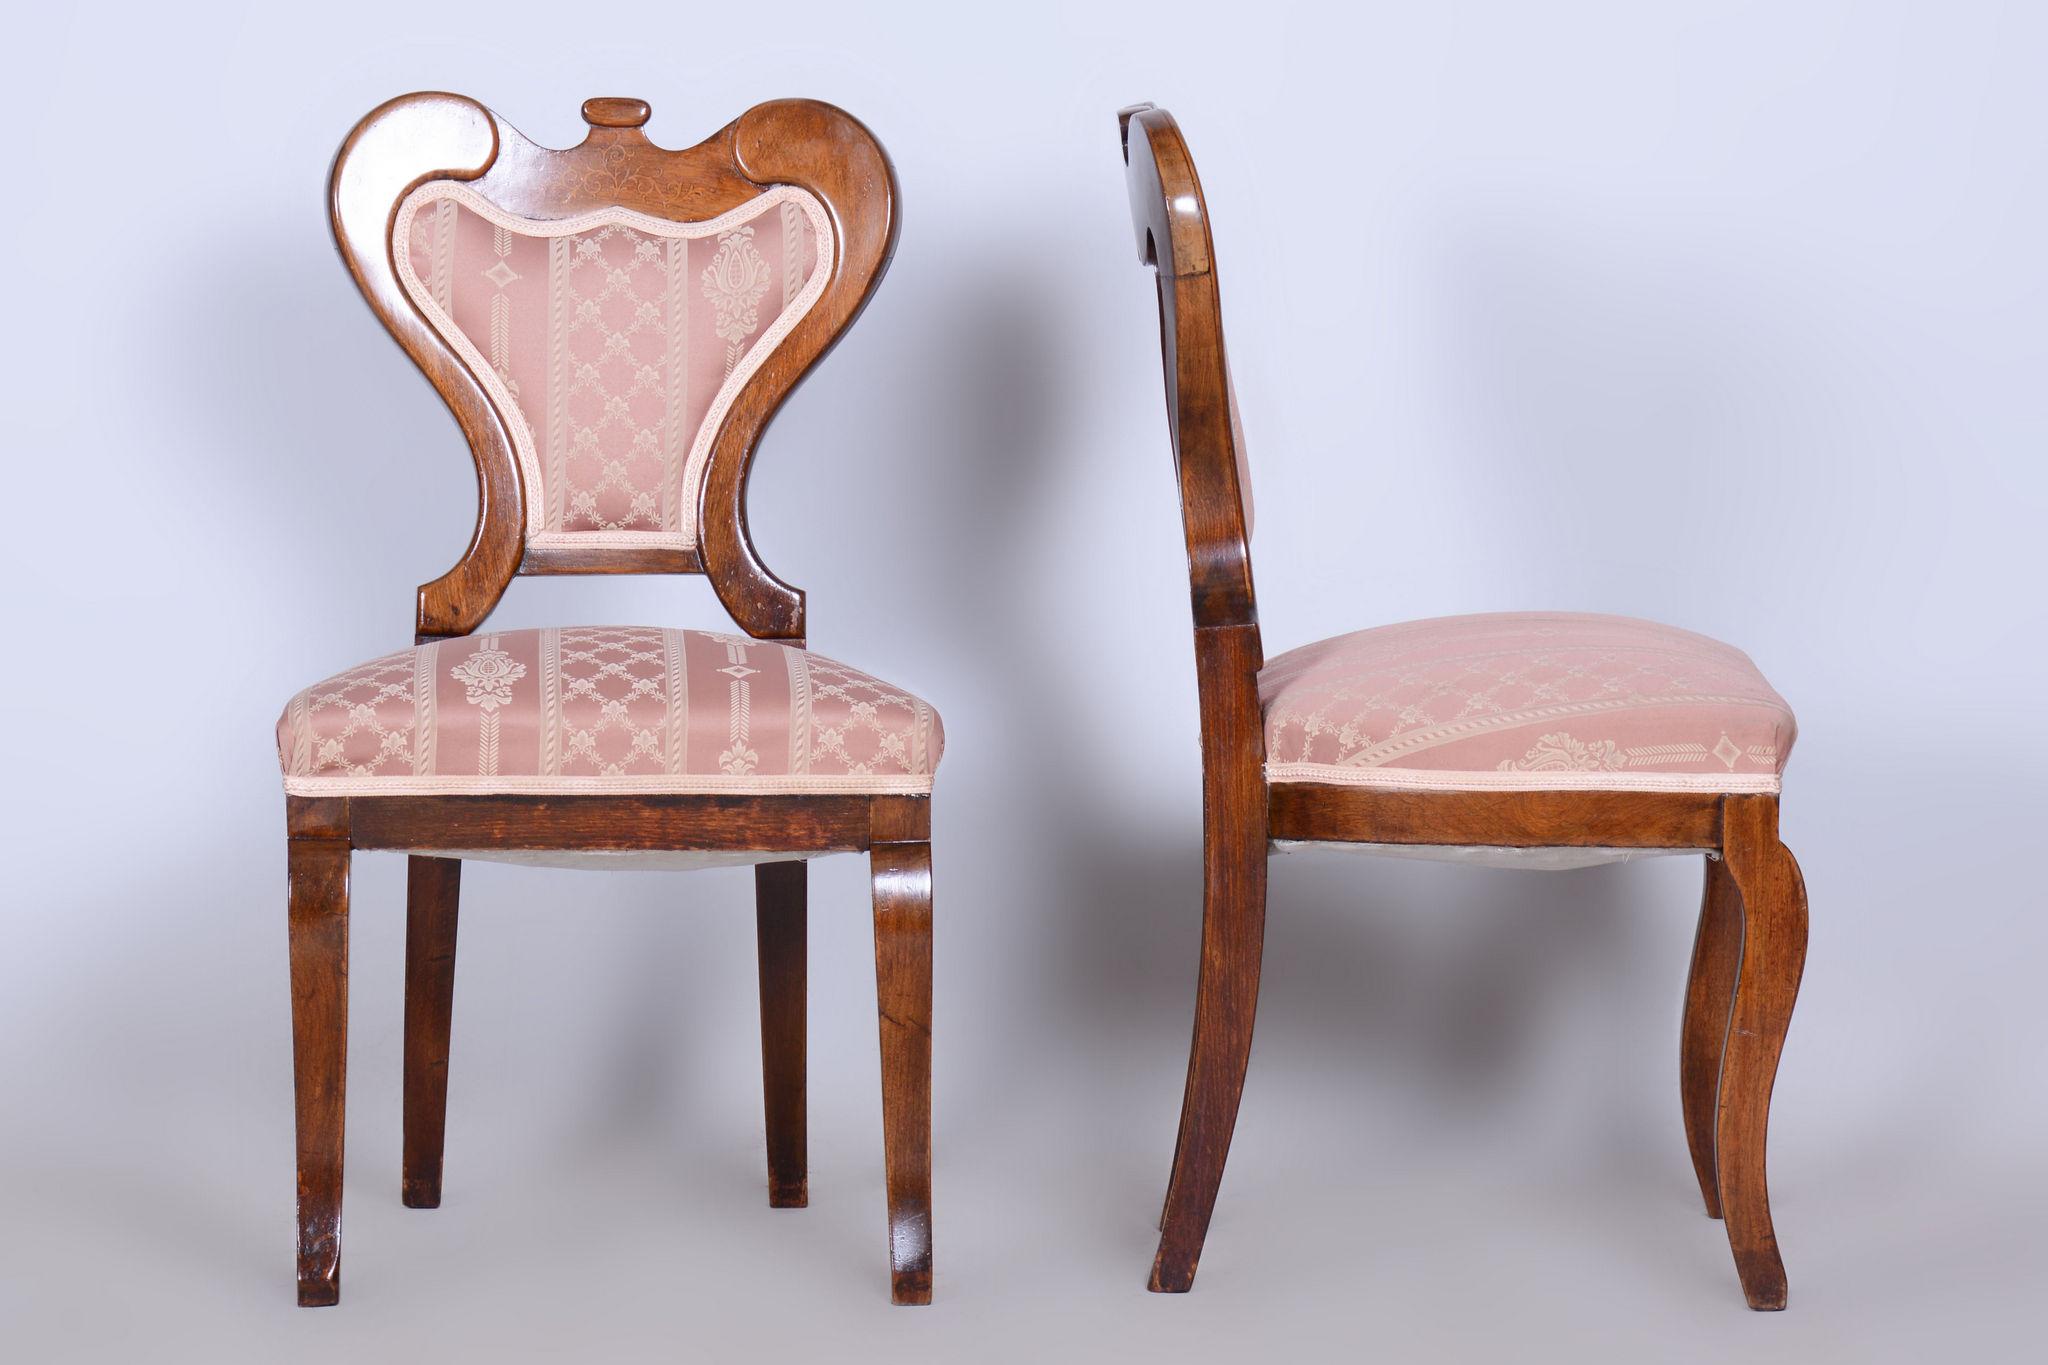 Restored Biedermeier Seating Set, Oak Walnut, Stable Constructon, Austria, 1840s In Good Condition For Sale In Horomerice, CZ